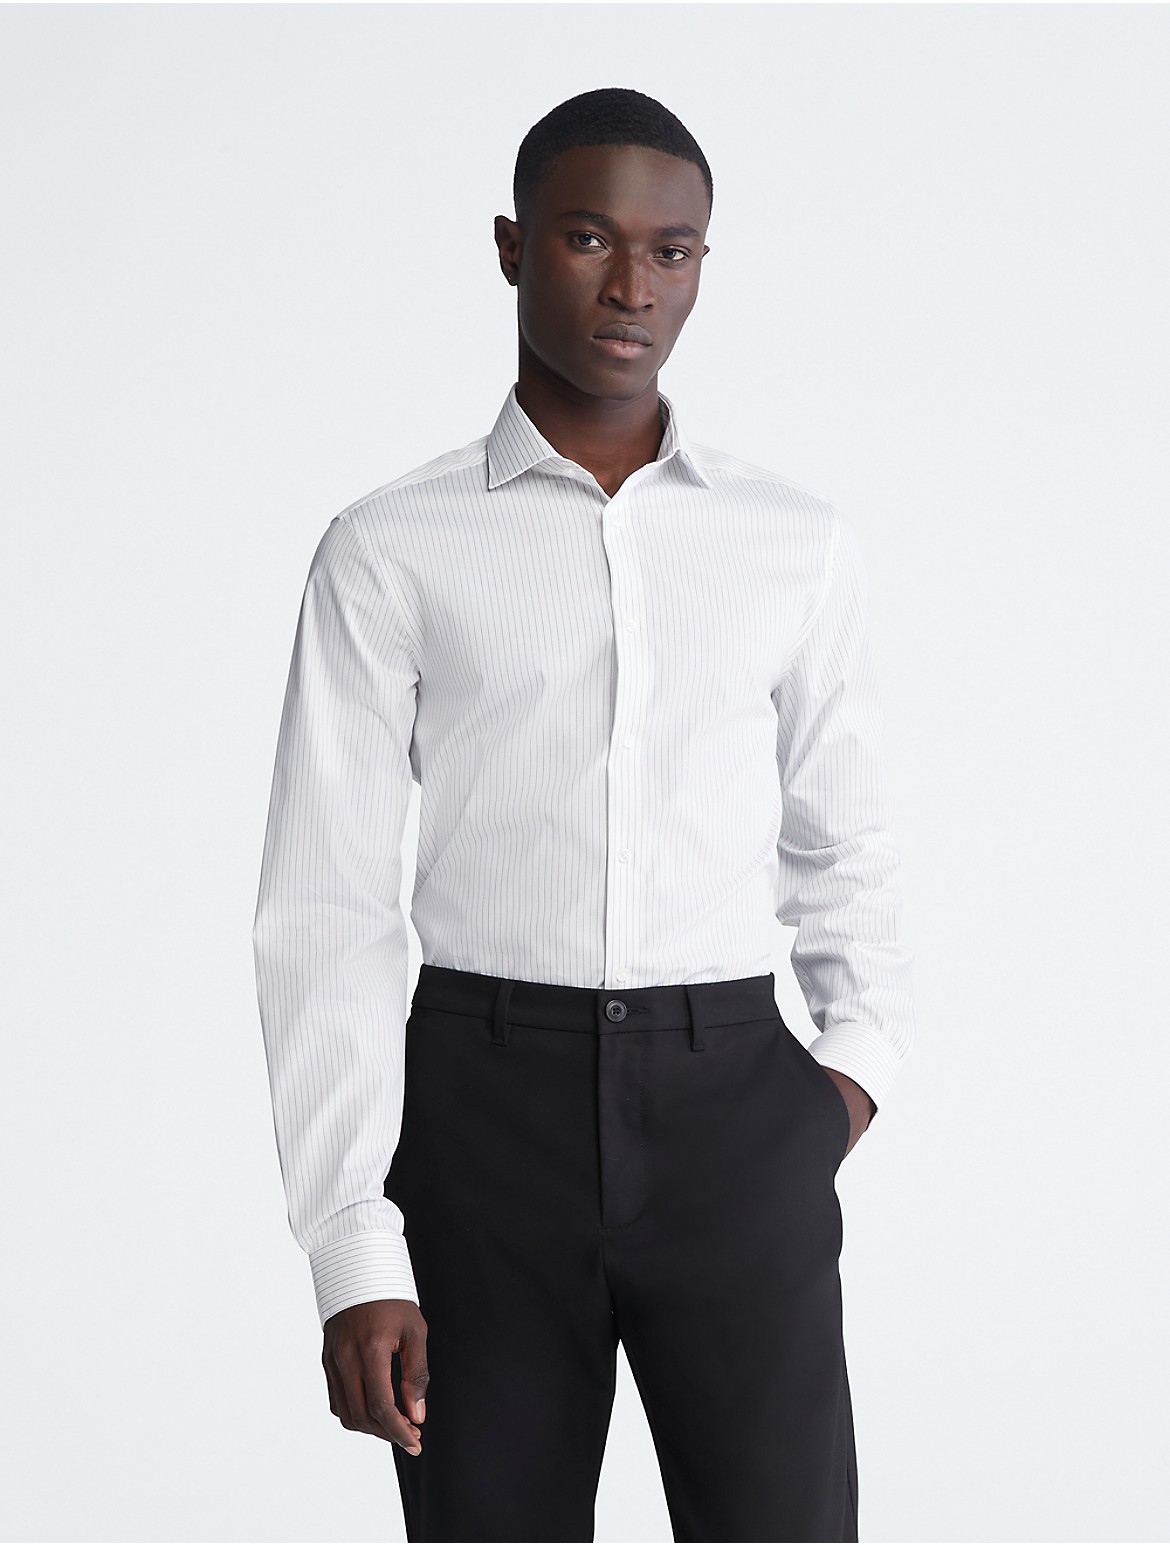 Calvin Klein Men's Steel Slim Fit Grey Stripe Dress Shirt - Grey - 14.5/32-33